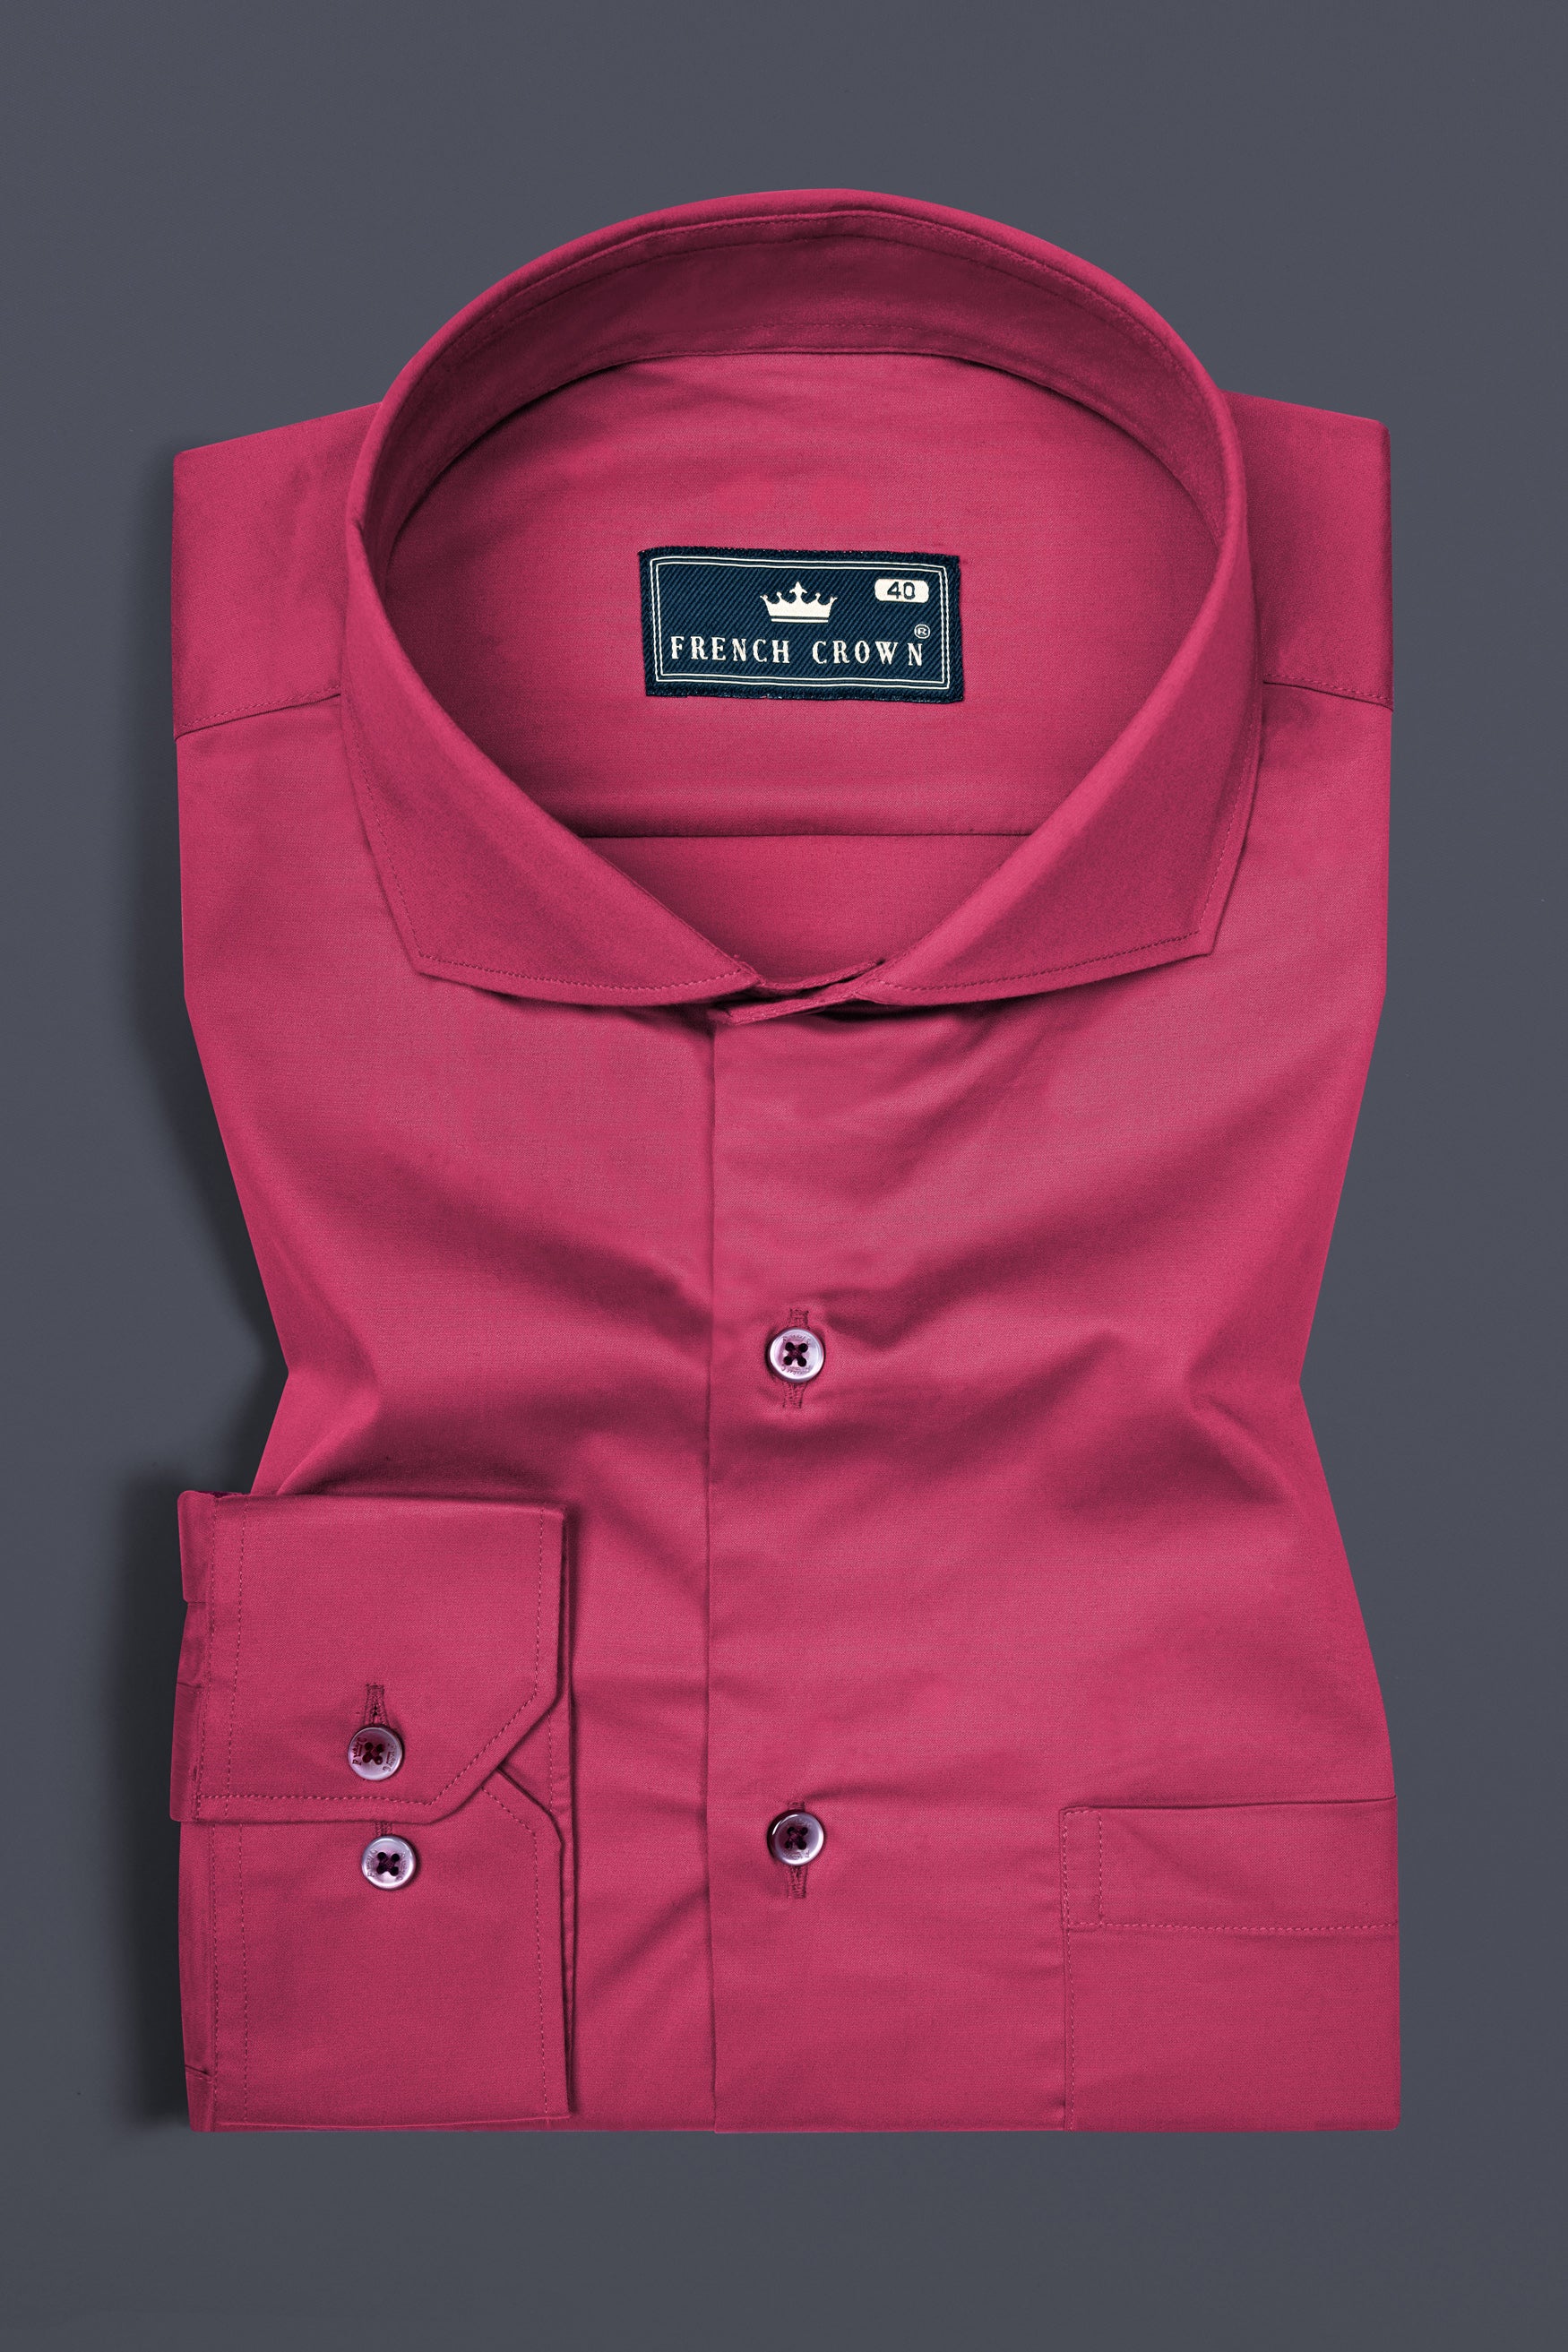 Hibiscus Red Subtle Sheen Super Soft Premium Cotton Shirt